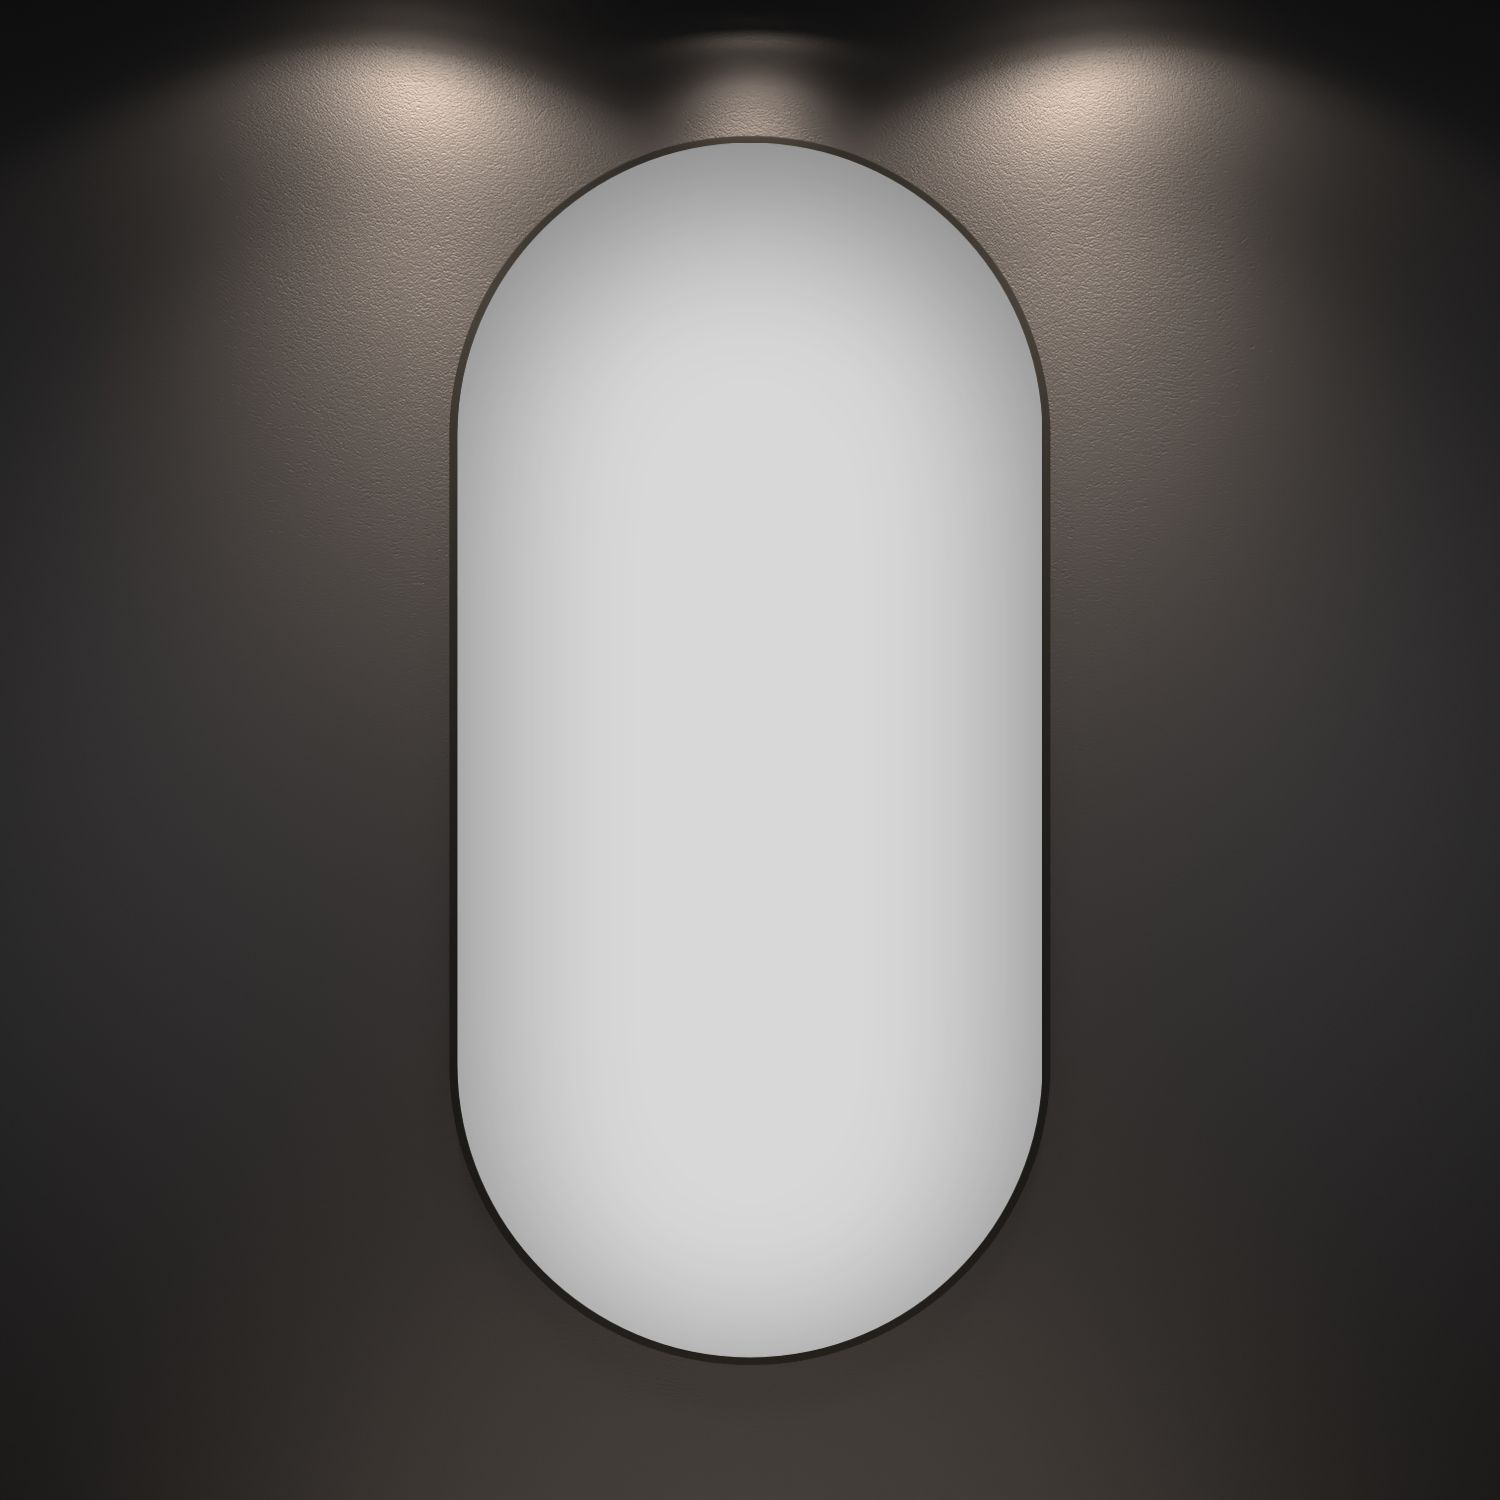 Влагостойкое овальное зеркало Wellsee 7 Rays' Spectrum 172201810, размер 45 х 90 см